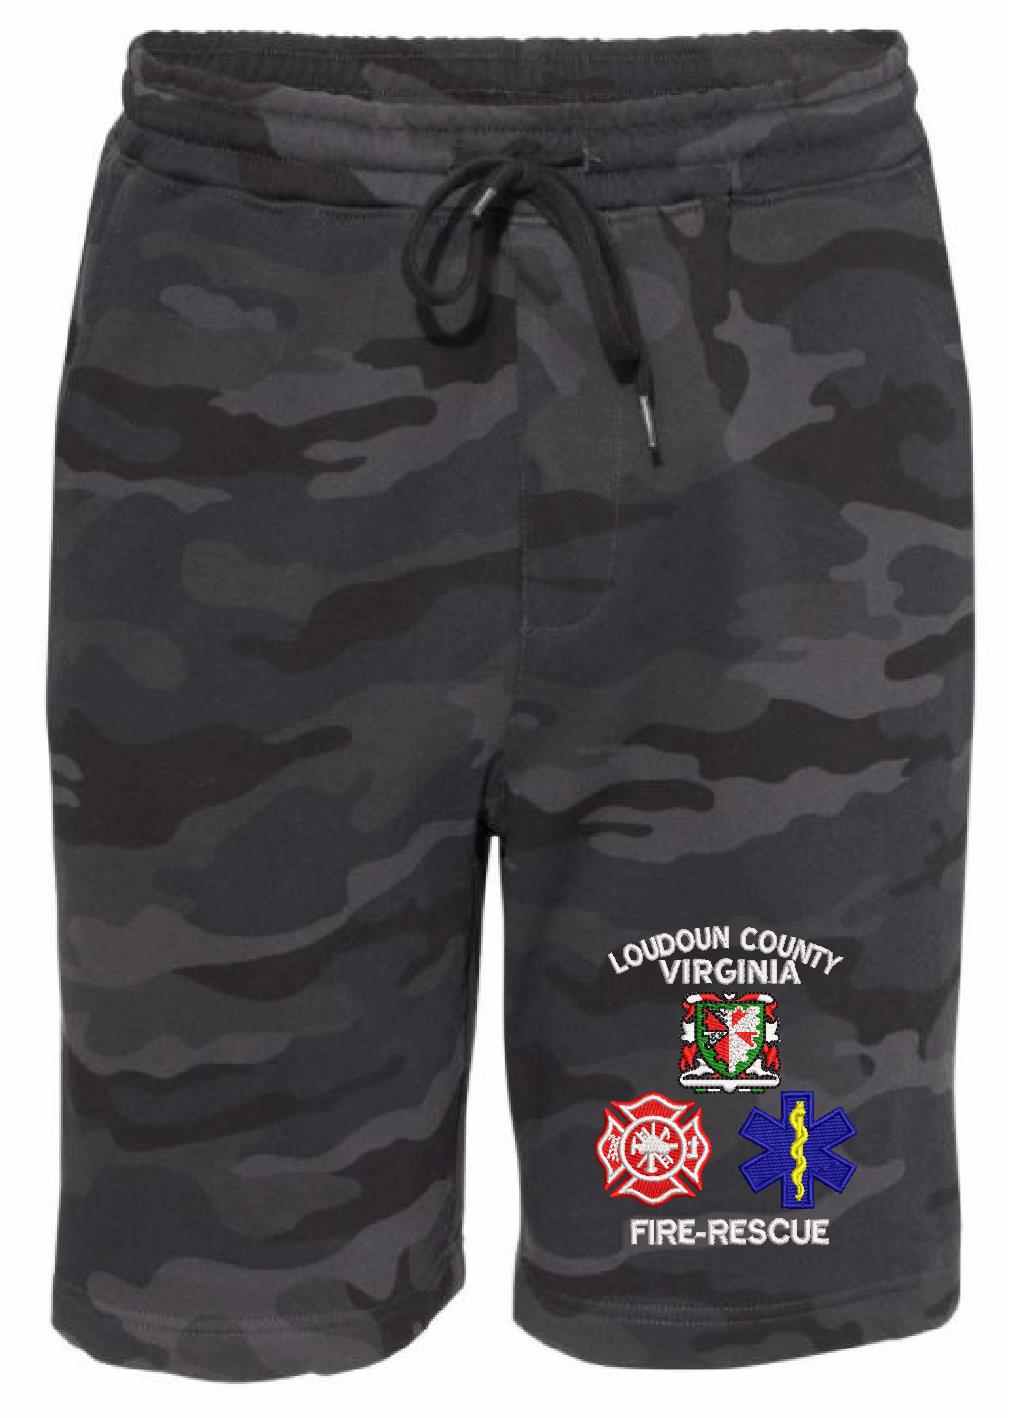 Loudoun County Fire Rescue Embroidered Fleece Shorts - Powercall Sirens LLC